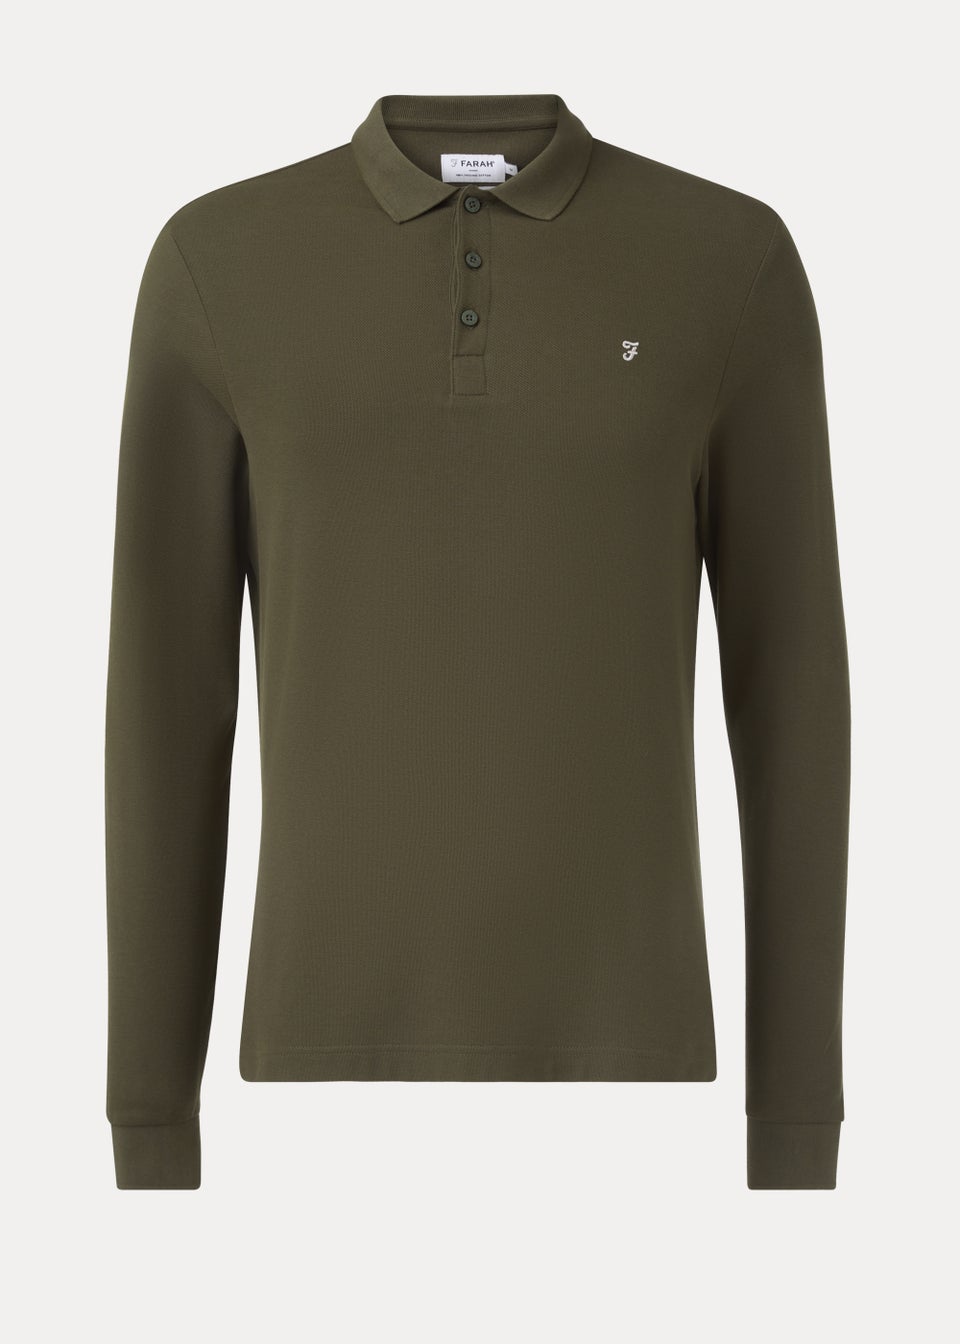 Farah Newcastle Olive Long Sleeve Polo Shirt - Matalan